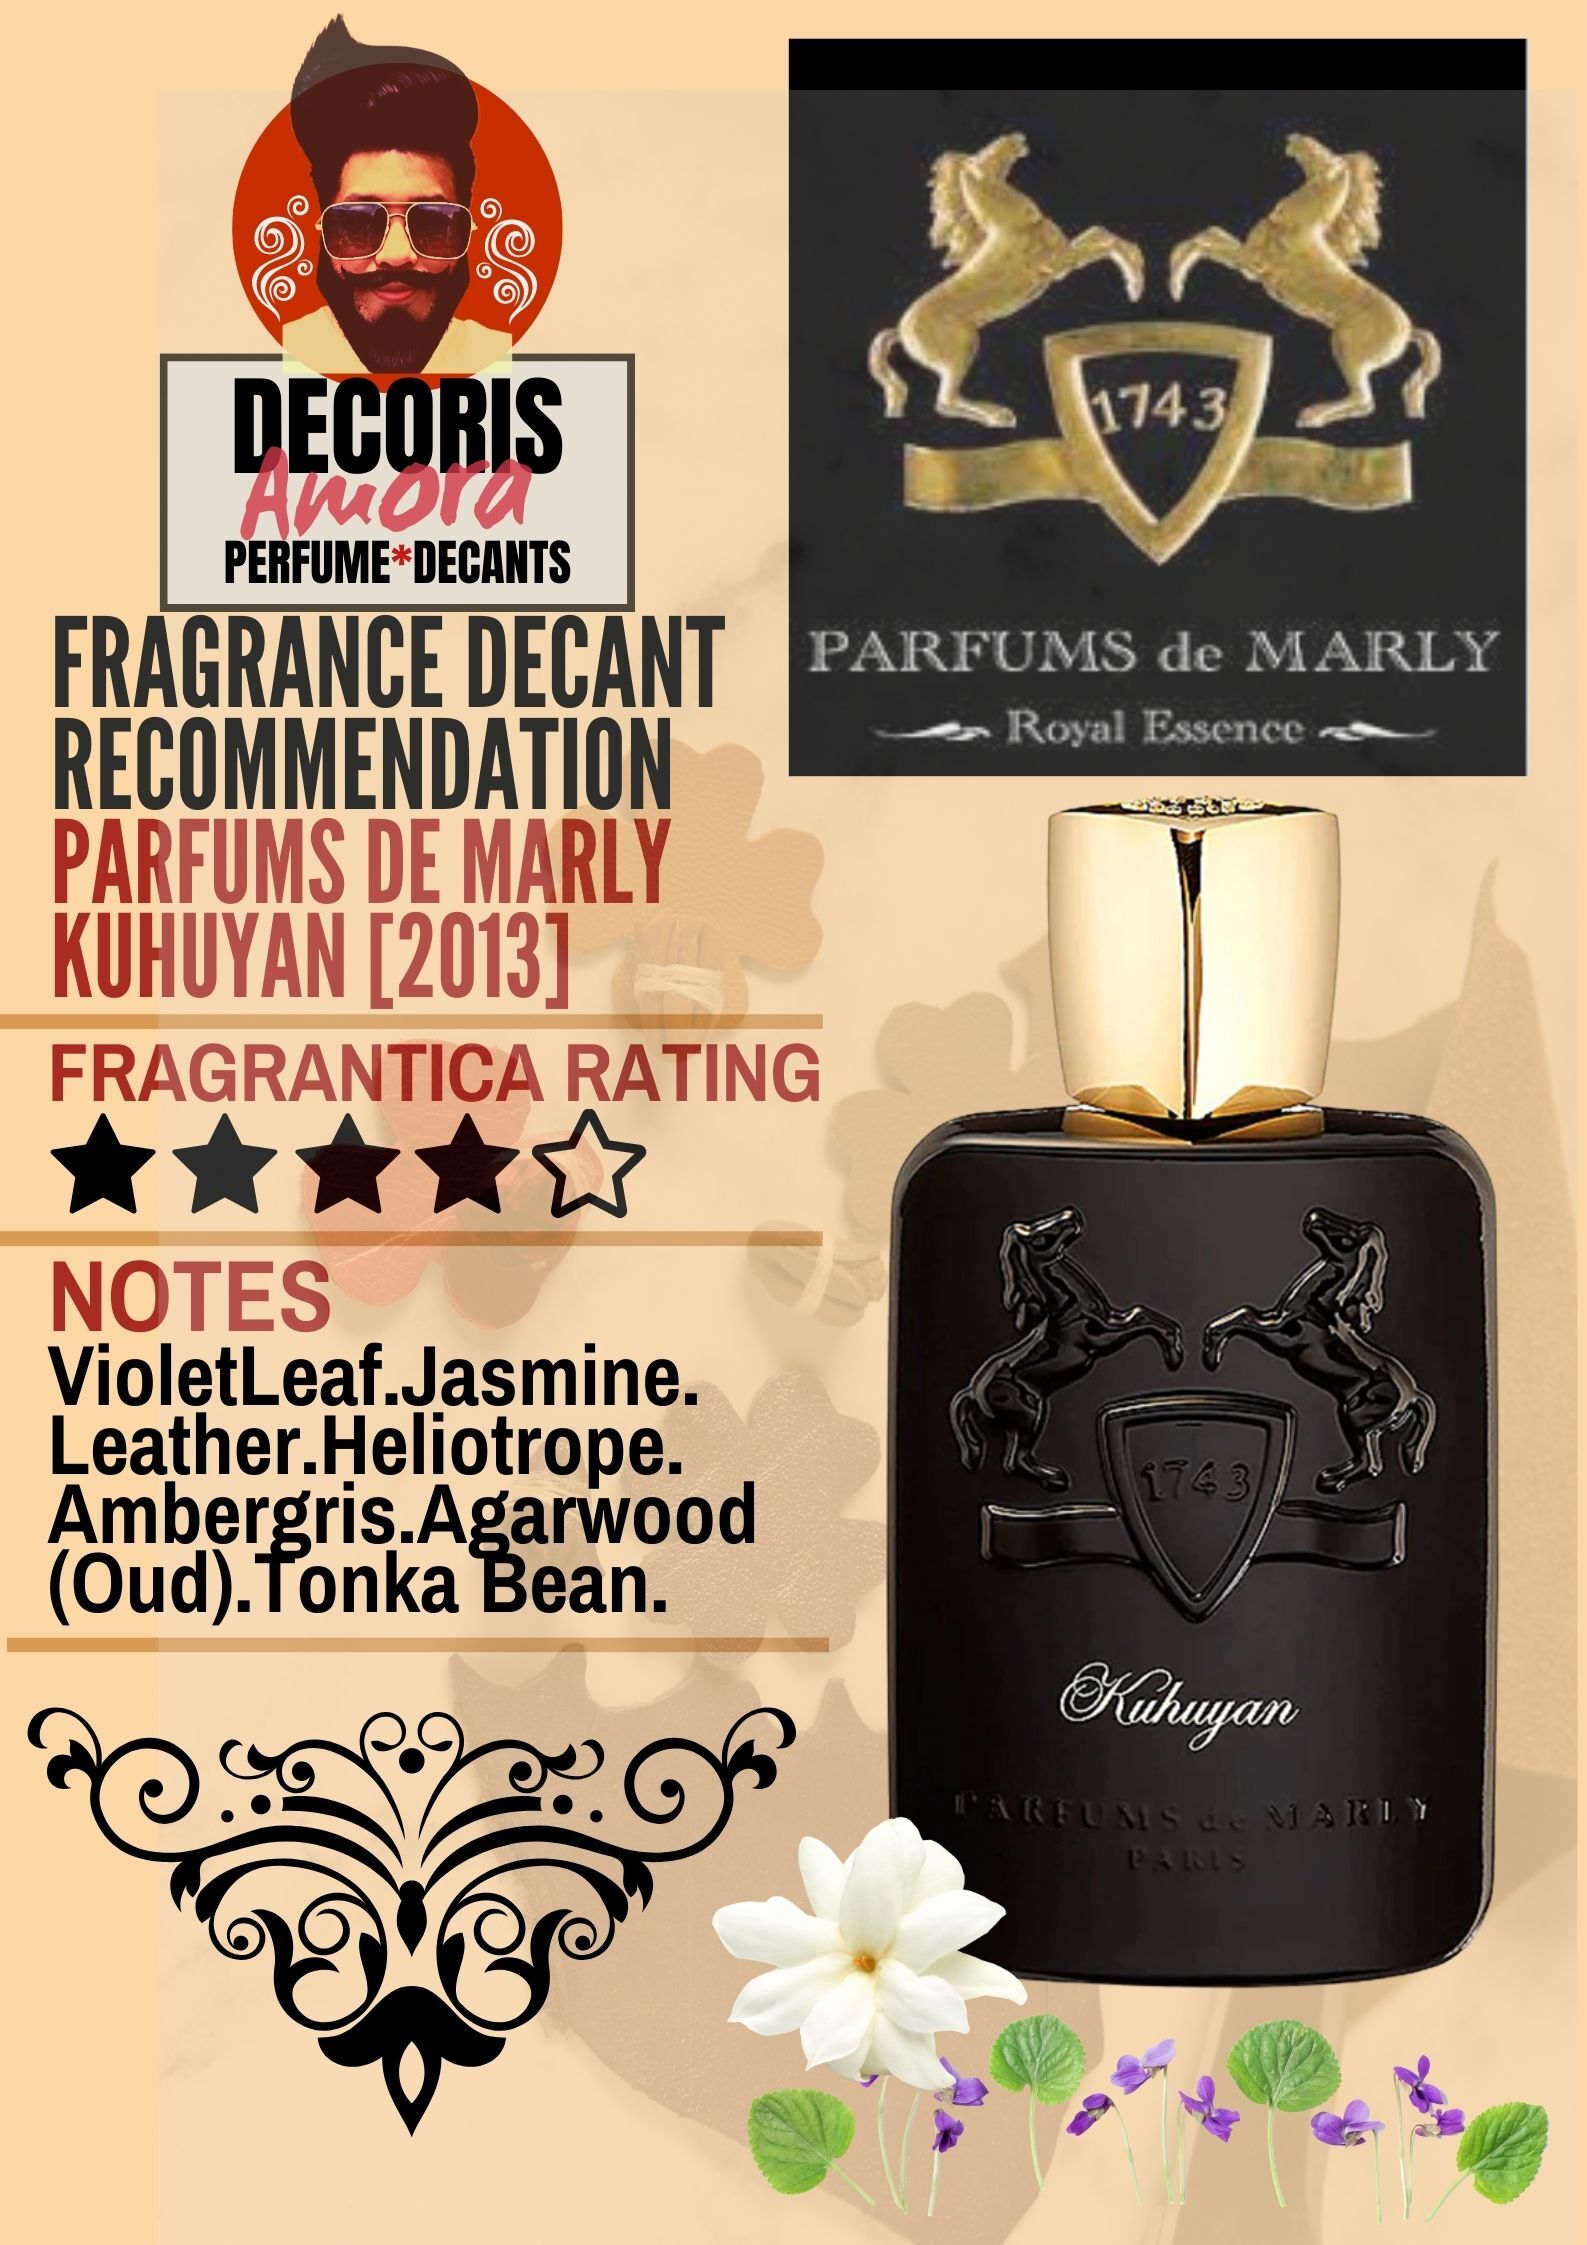 Parfums de Marly Kuhuyan - Perfume Decant – Decoris Amora Perfume Decant